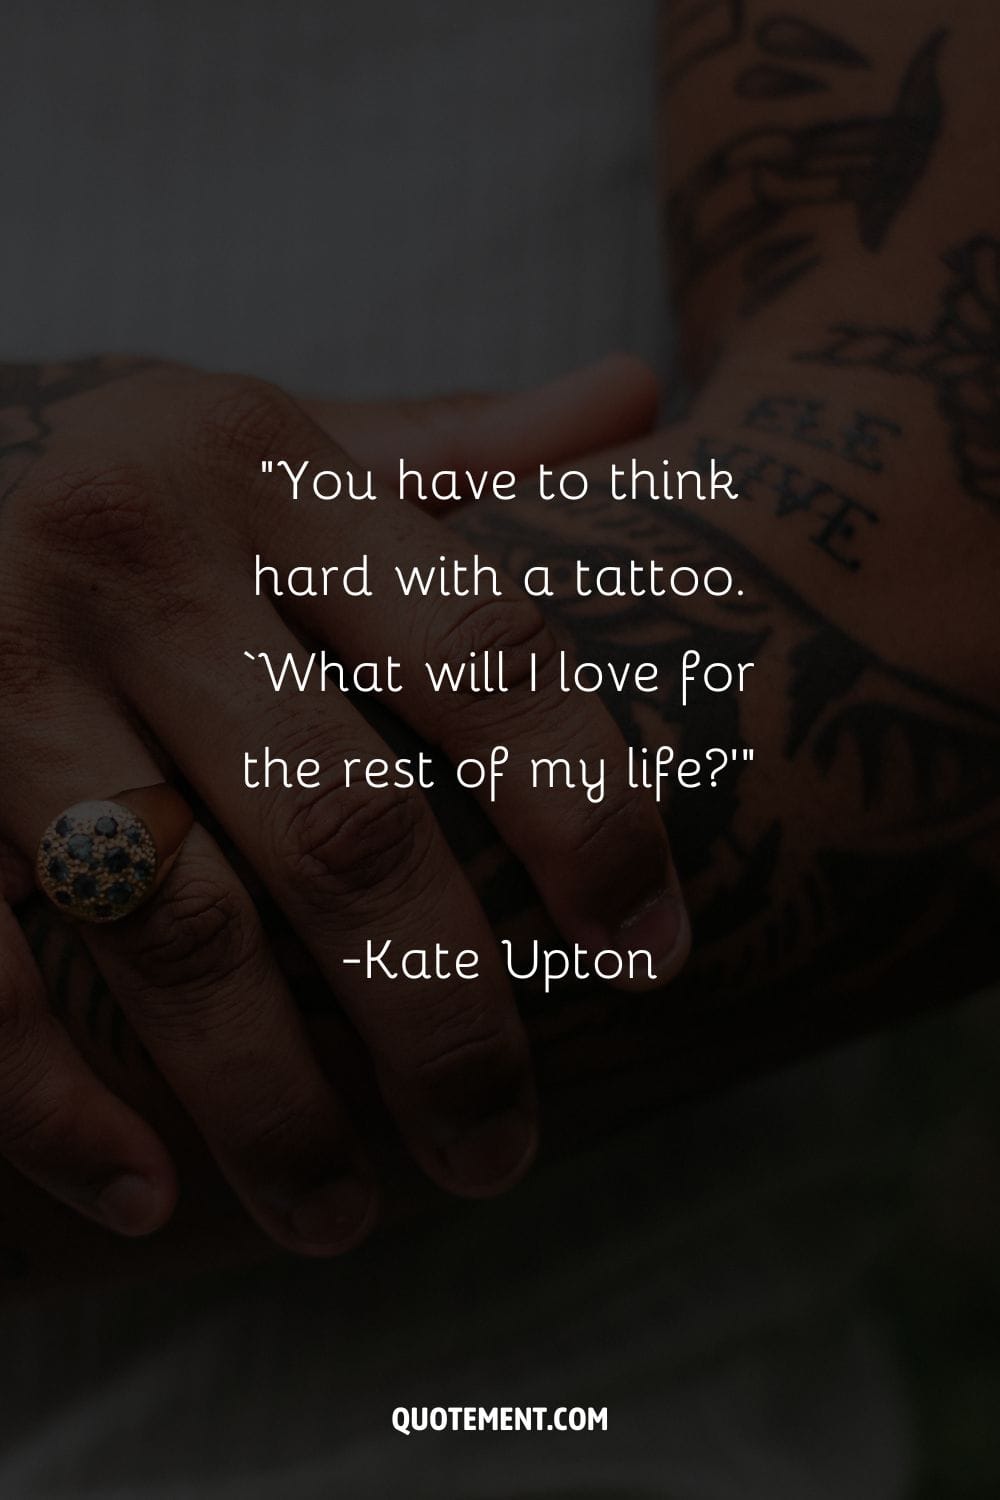 expressive tattoos adorn a man's hands